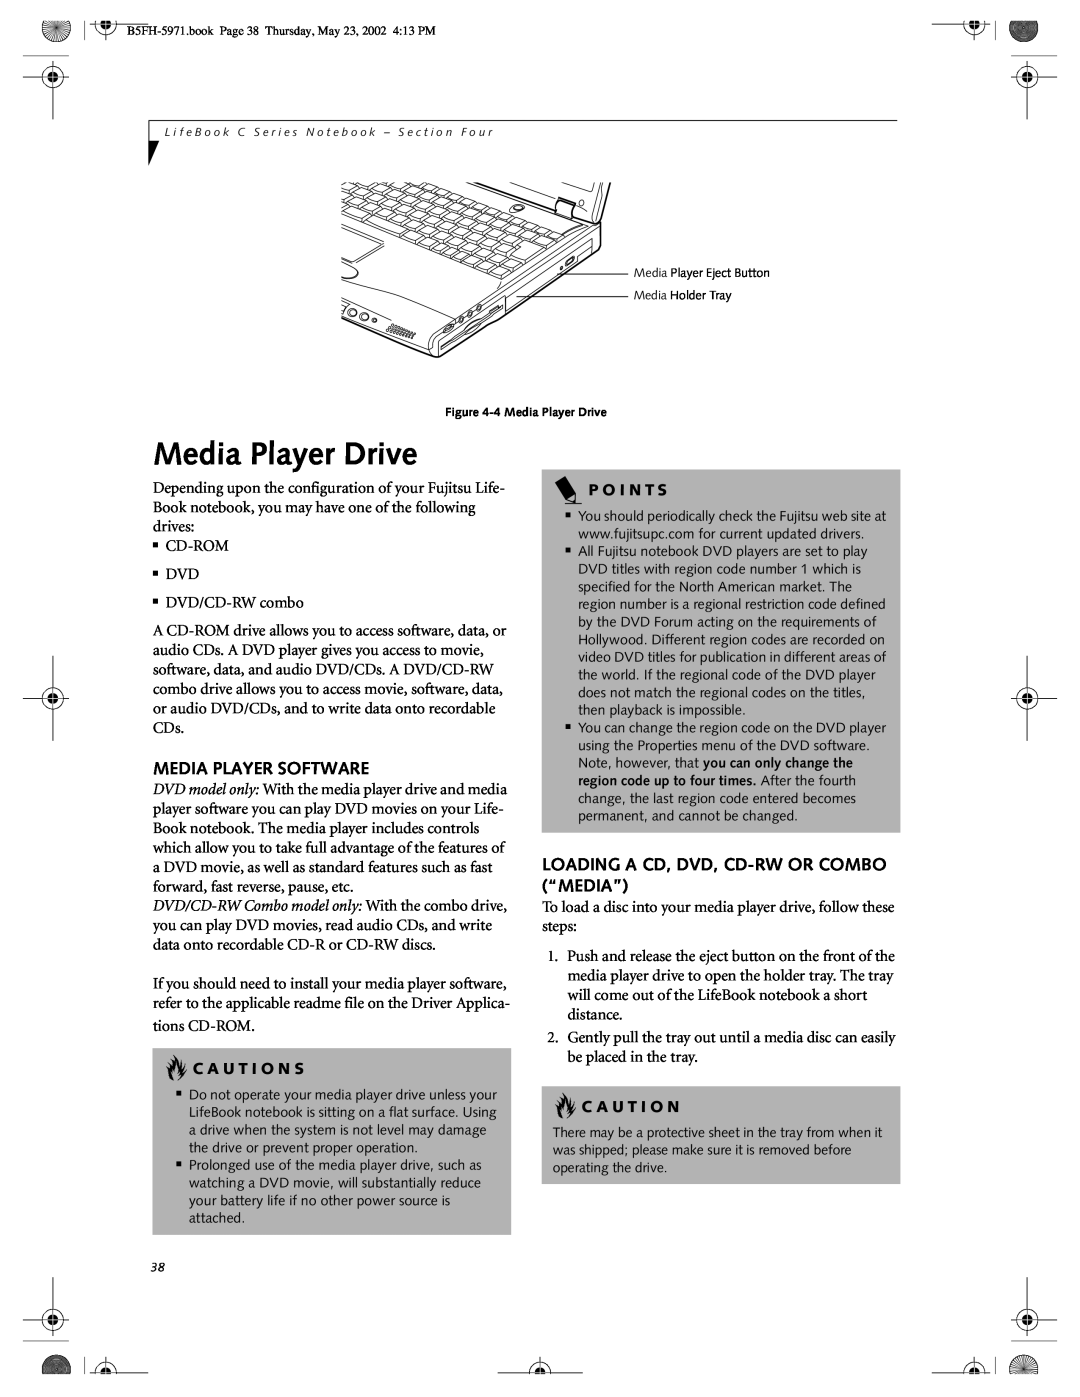 Fujitsu C2111, C2010 Media Player Drive, Media Player Software, Loading A Cd, Dvd, Cd-Rw Or Combo “Media”, C A U T I O N S 